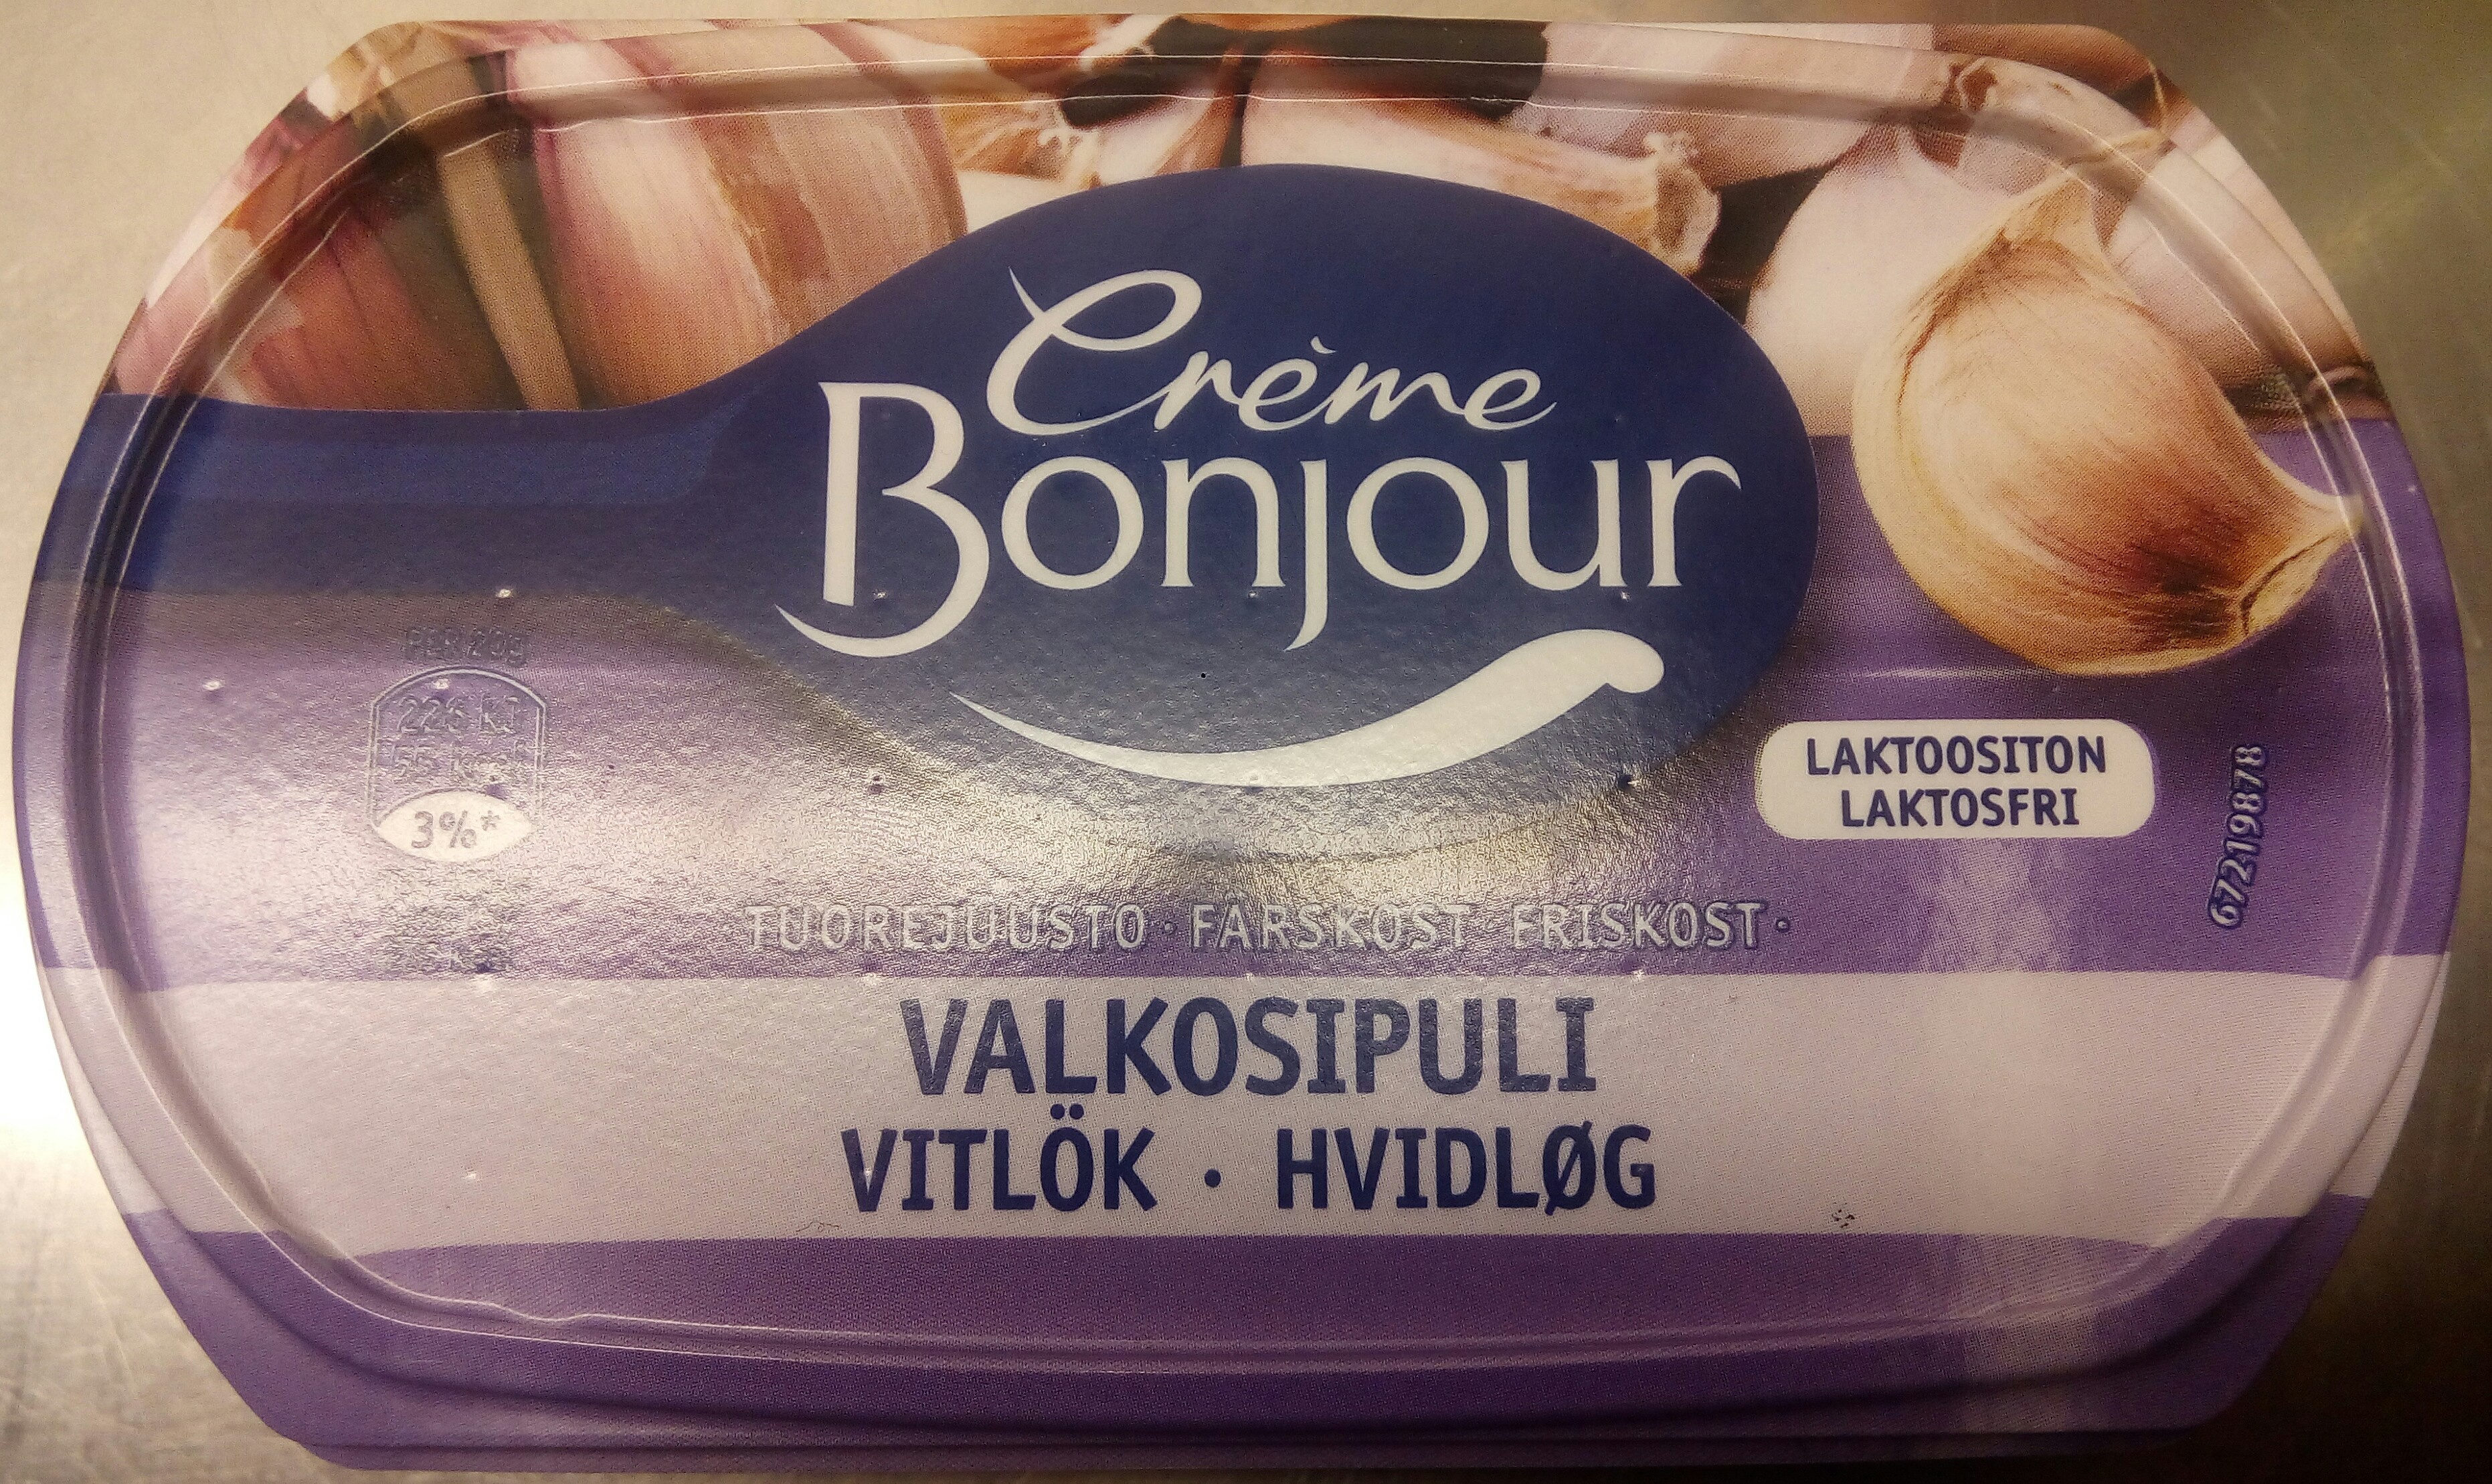 Crème Bonjour laktosfri färskost vitlök - Produkt